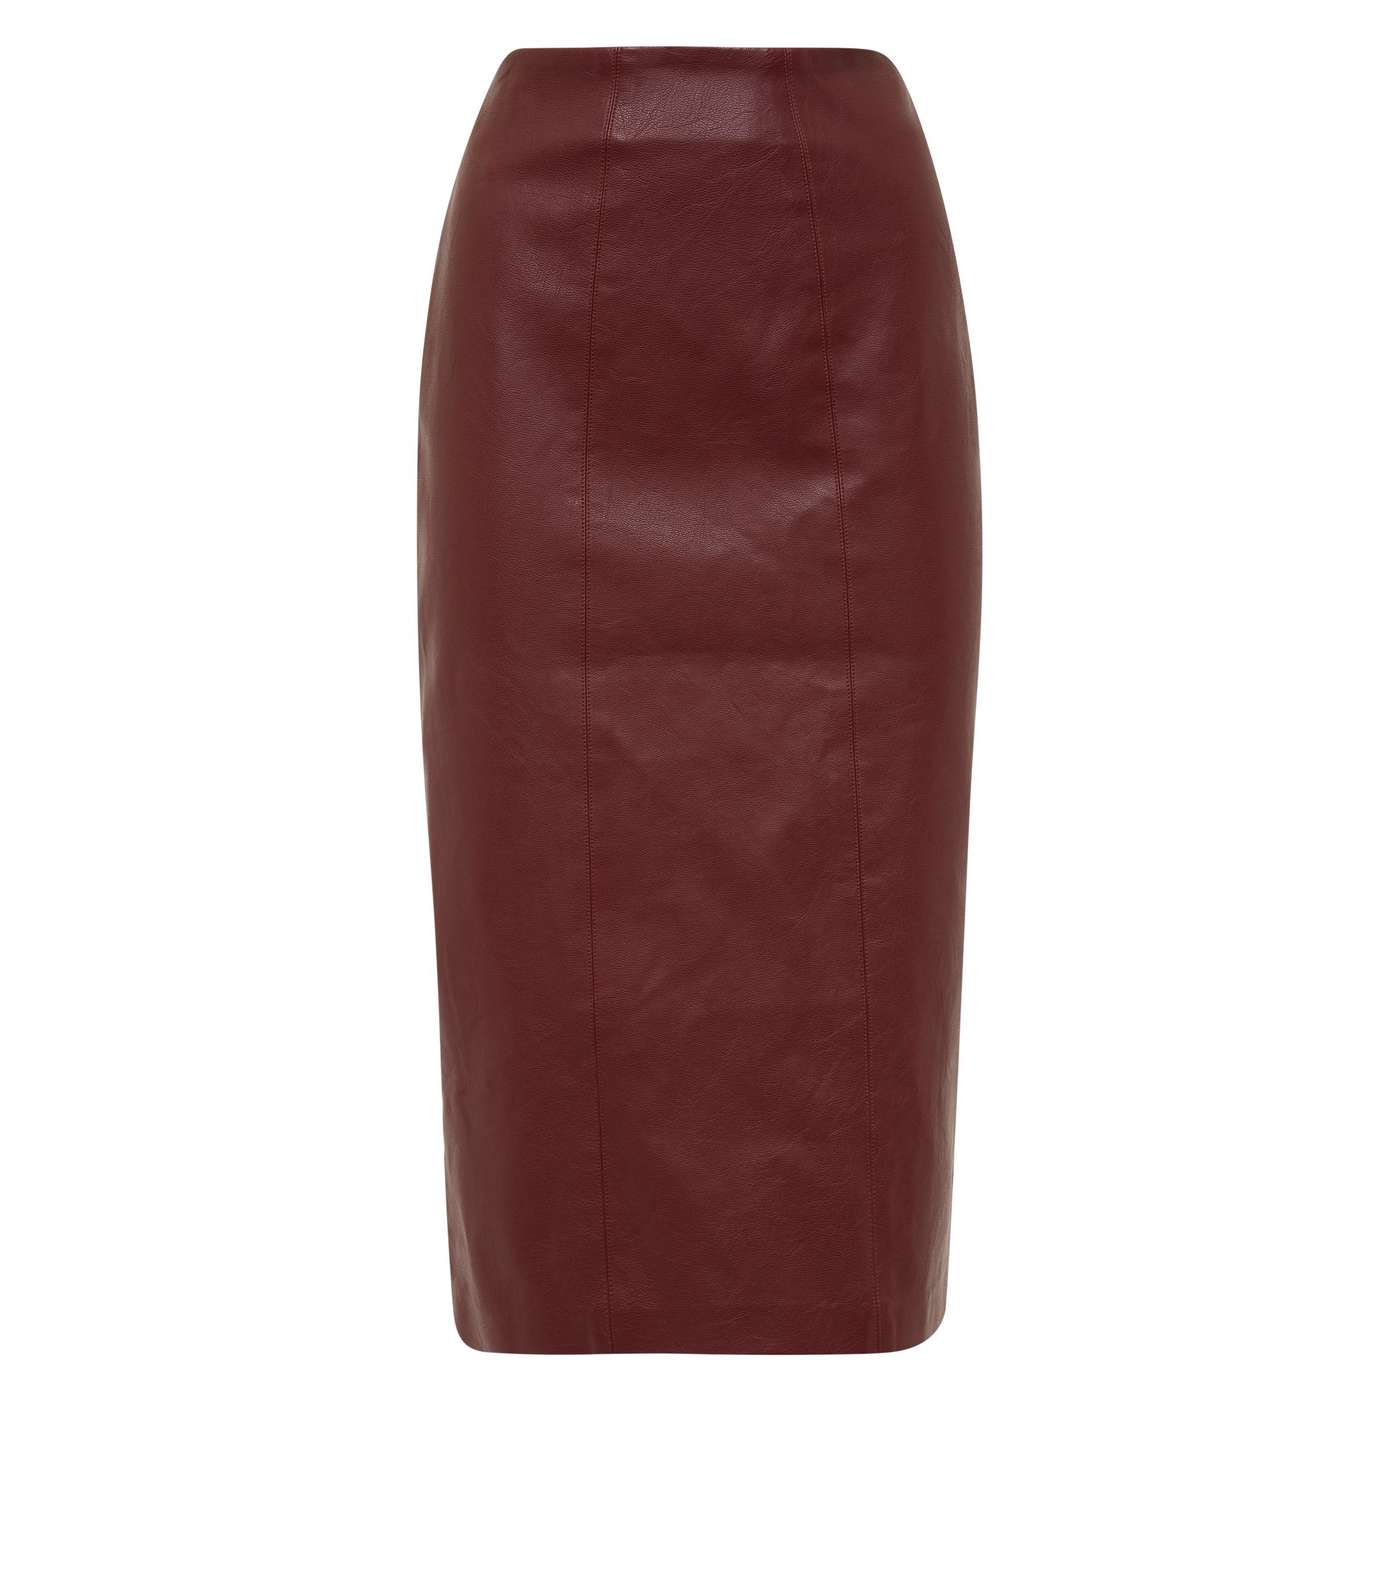 Burgundy Leather-Look Pencil Skirt Image 4